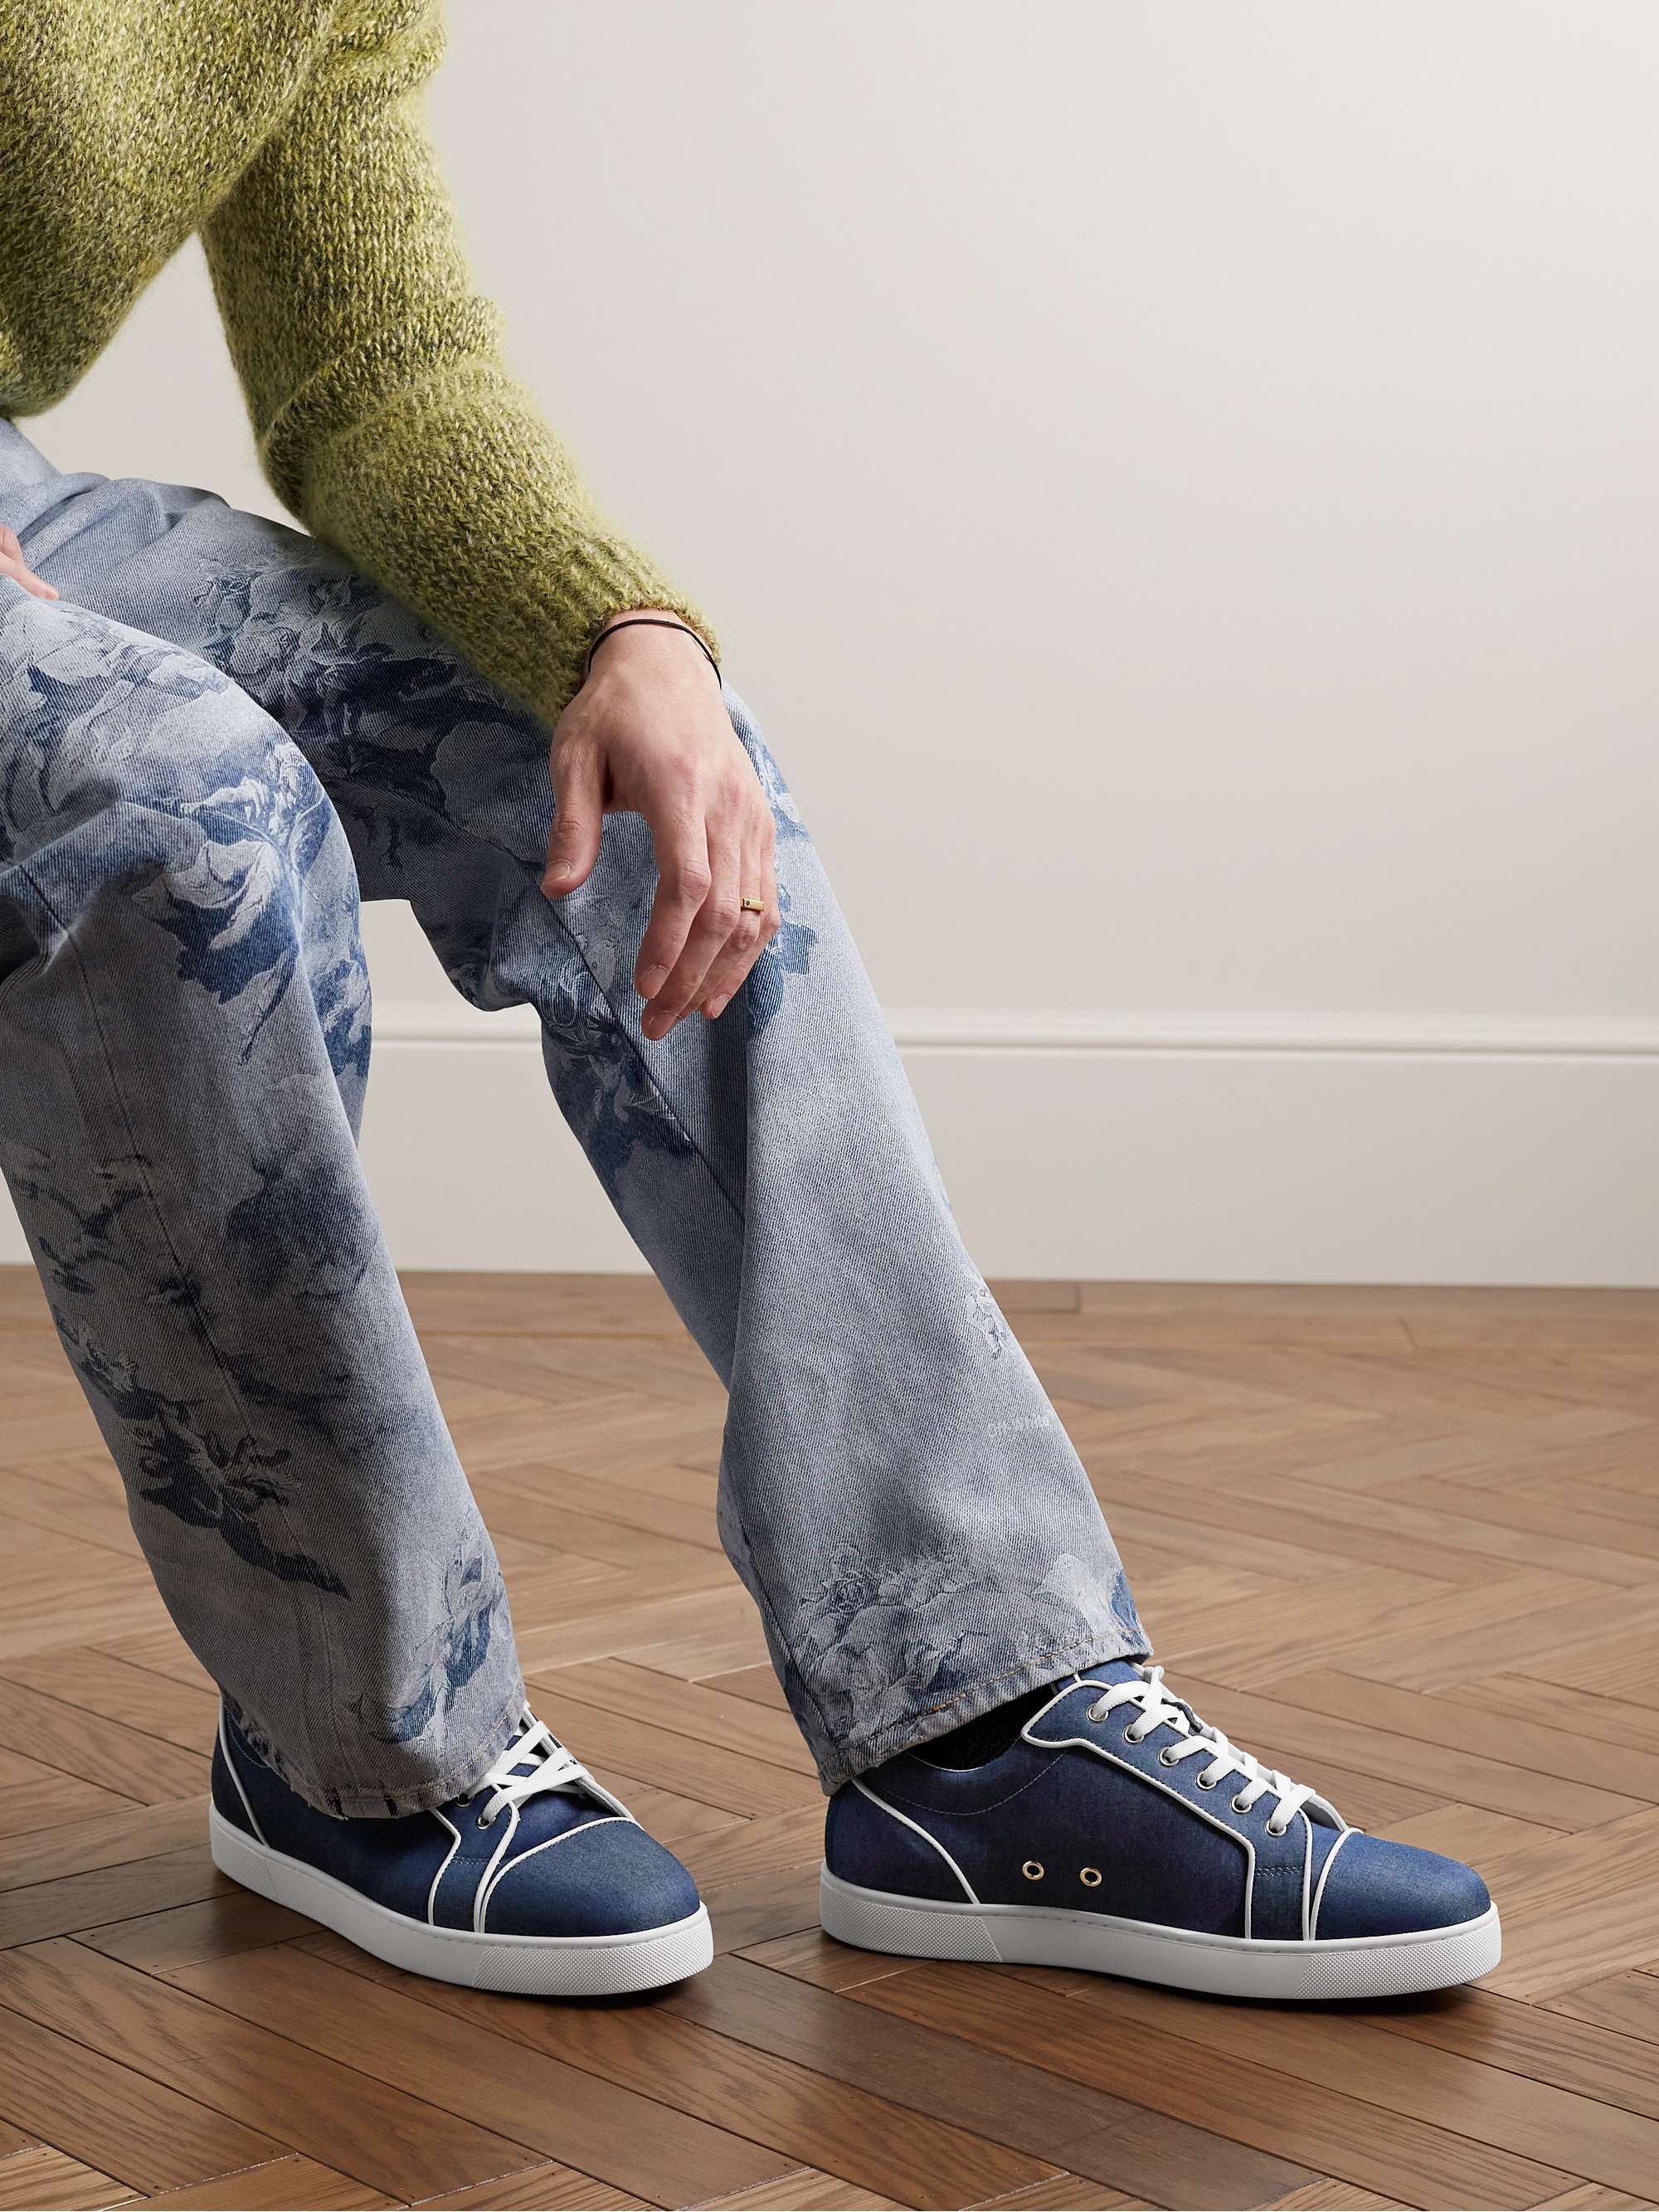 Christian Louboutin Men's VarsiJunior Spikes 2 Leather Low-Top Sneakers